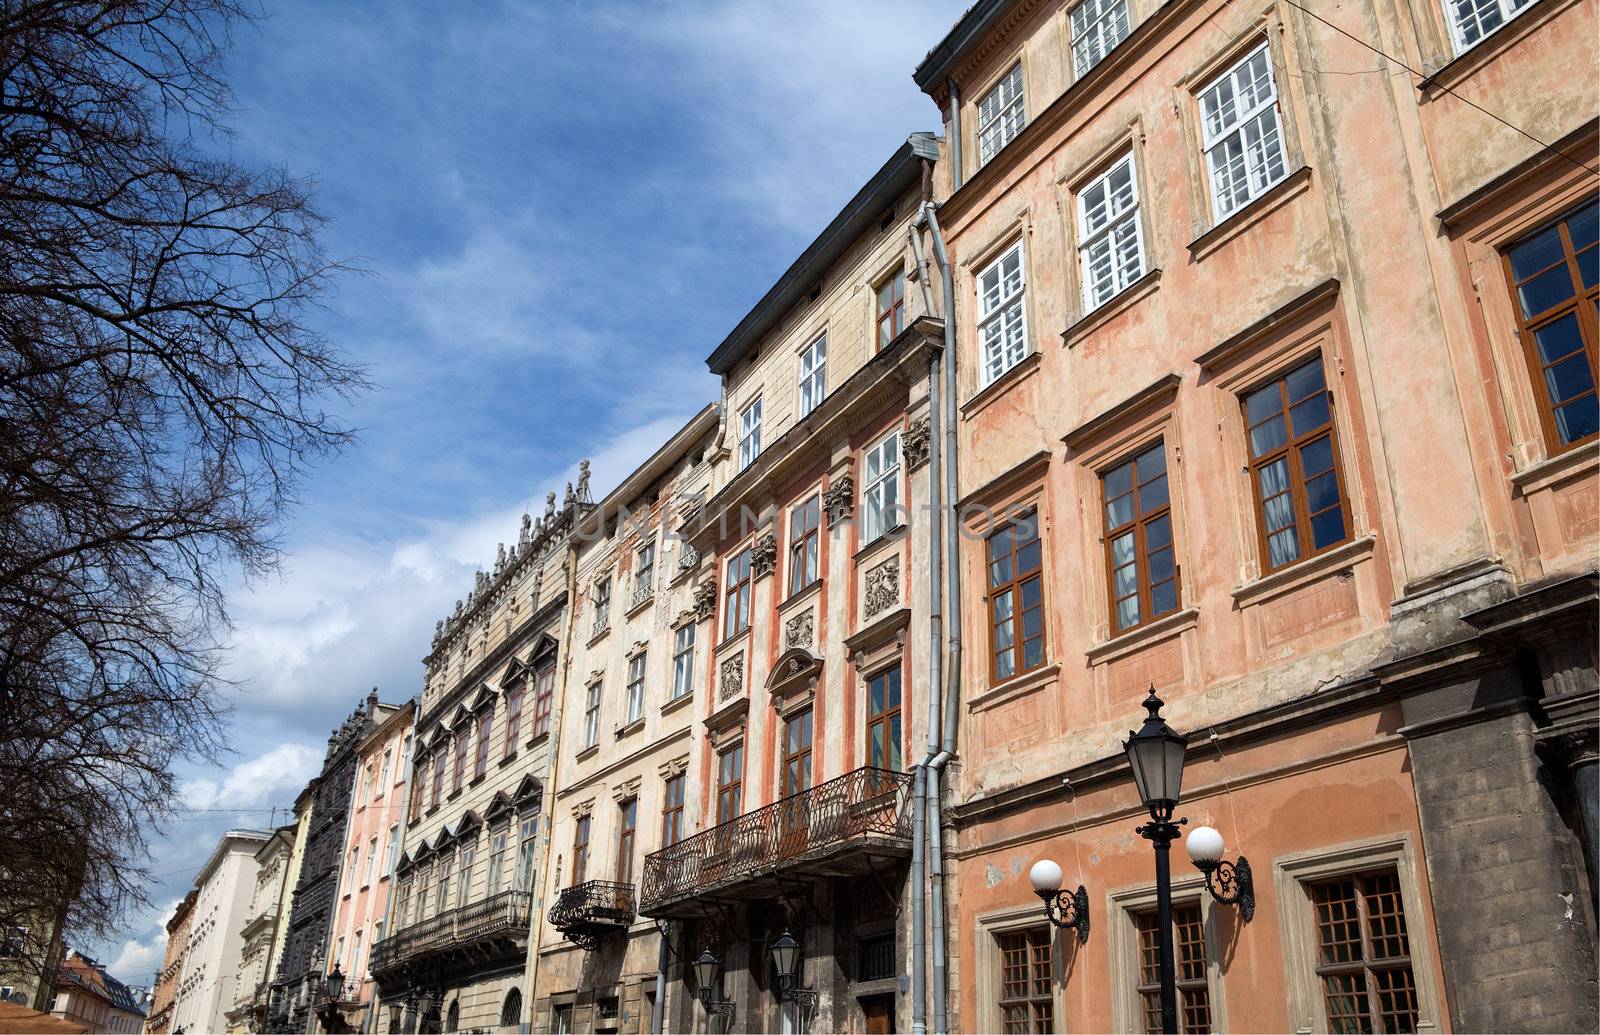 street in old center of Lviv city in Western Ukraine